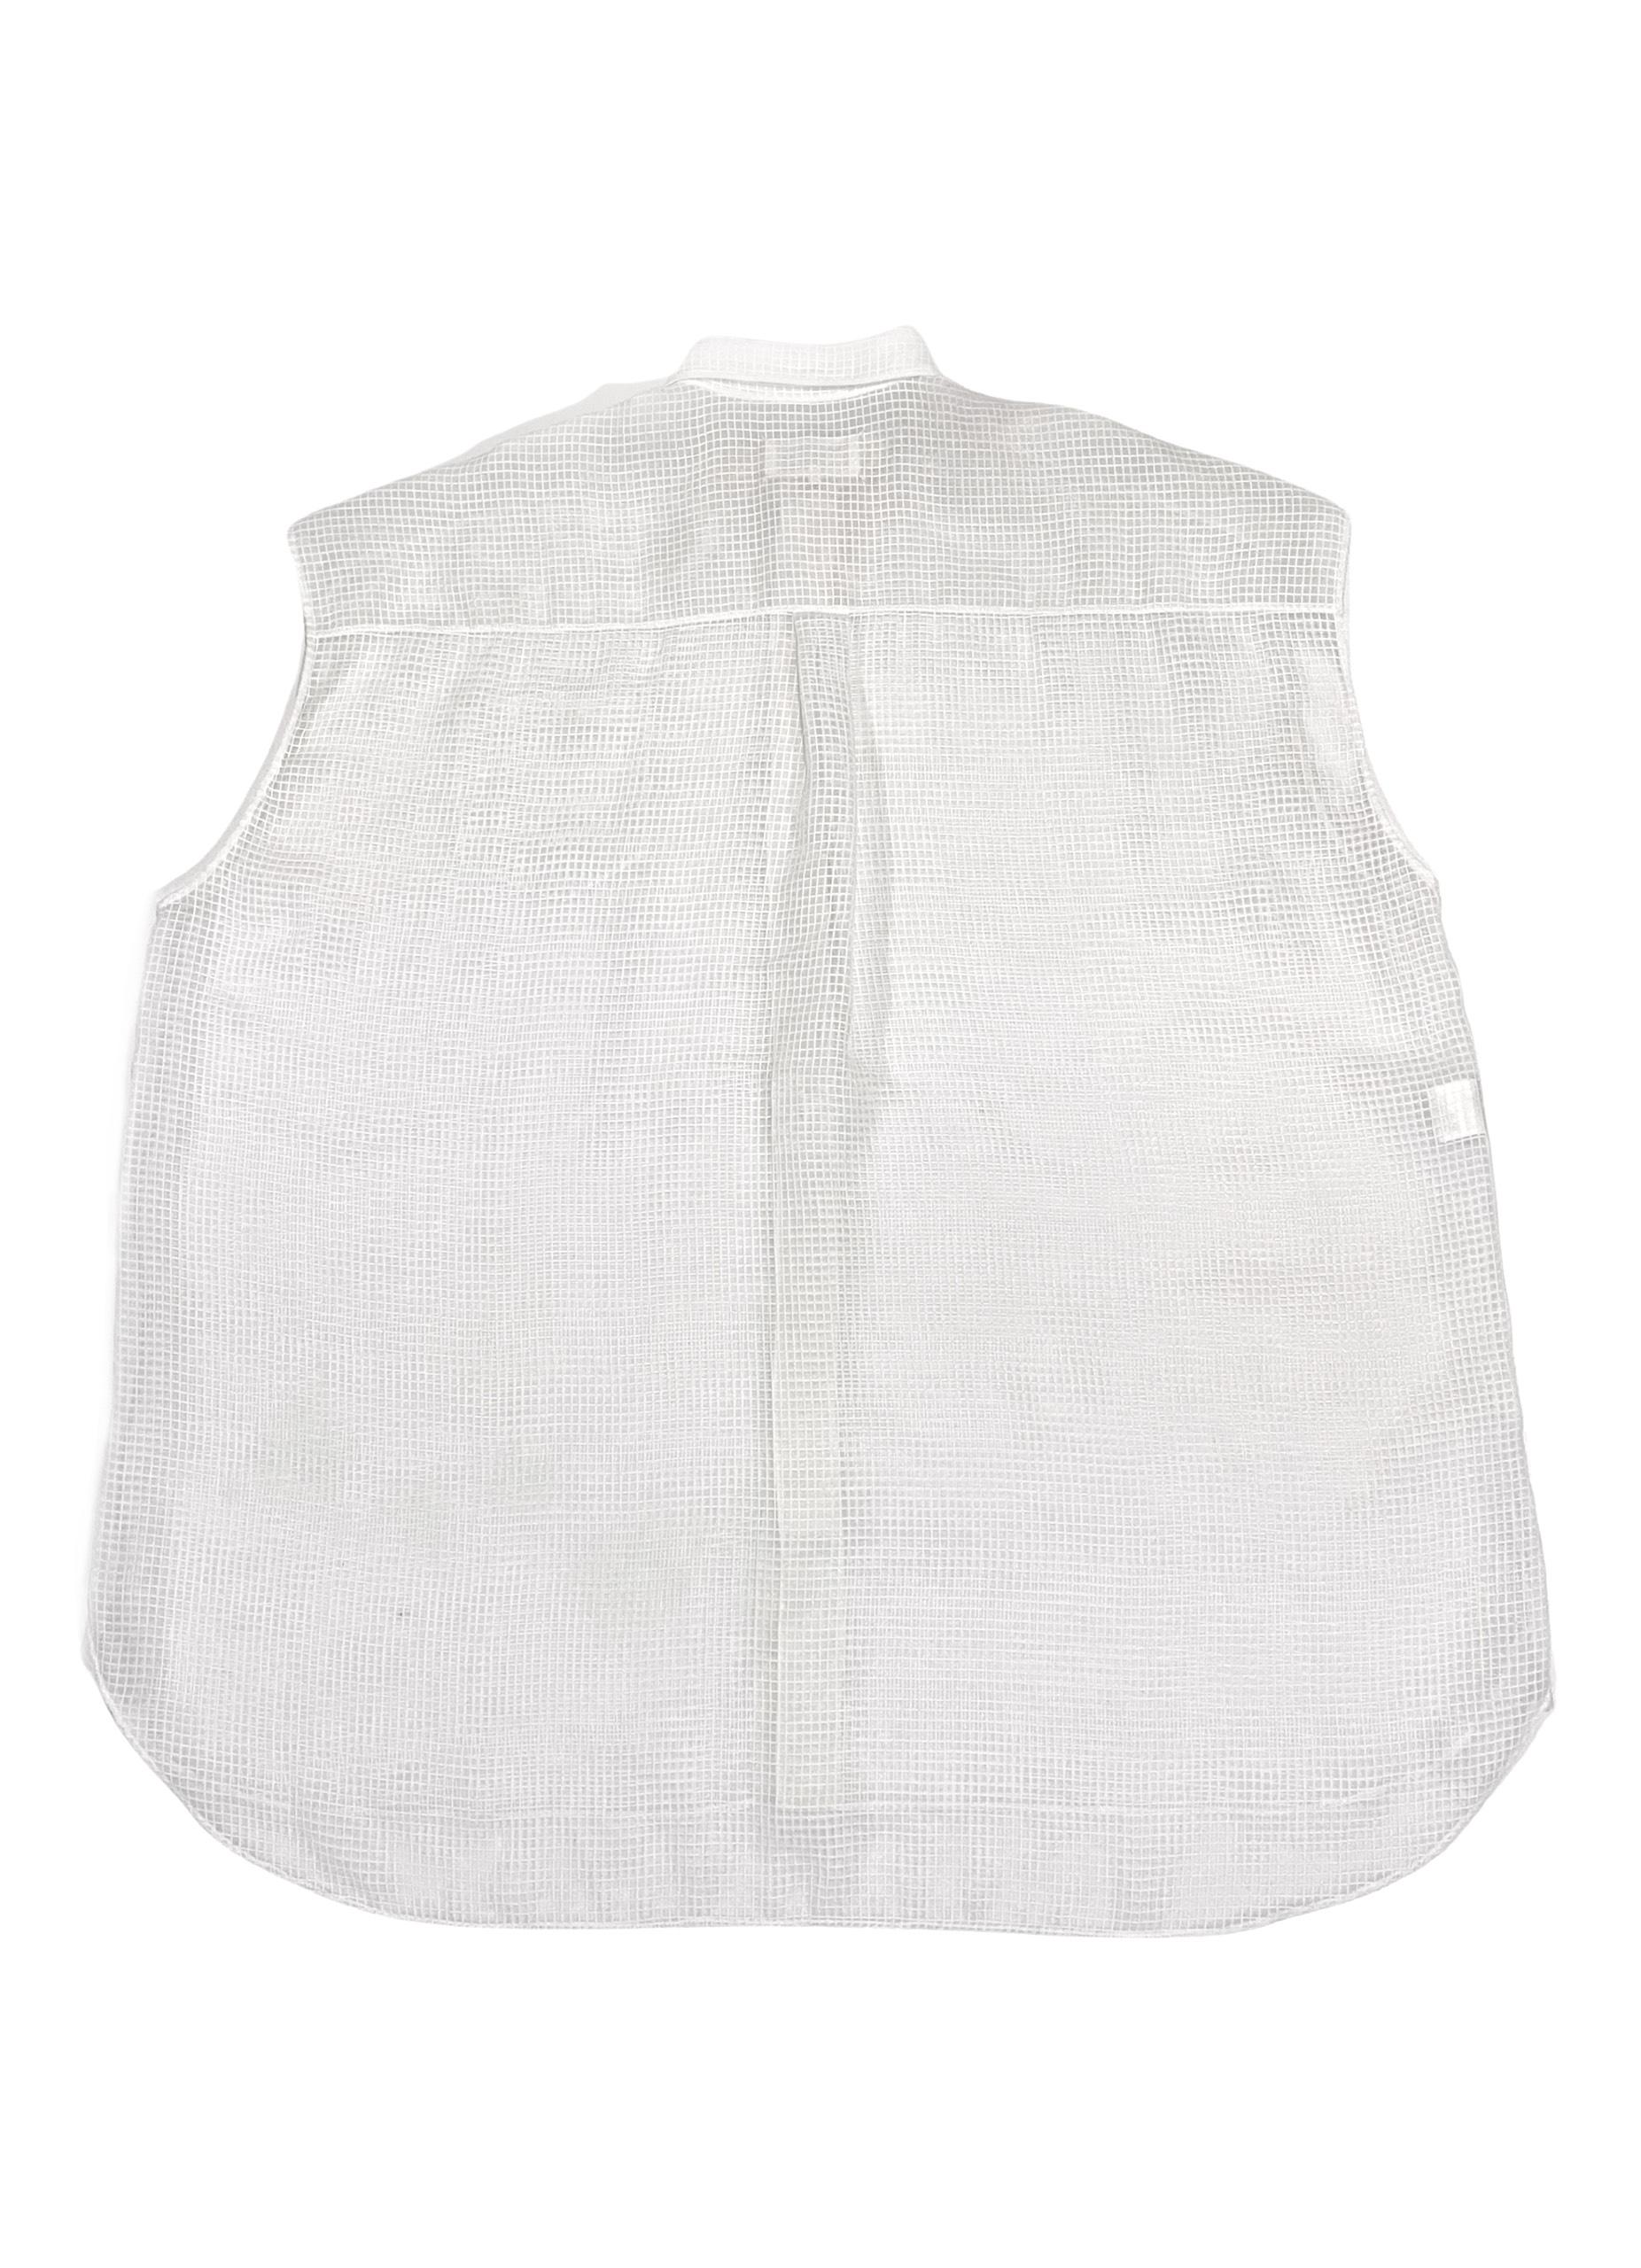 Maison Margiela S/S2020 Fish-Net Sleeveless Shirt For Sale 2